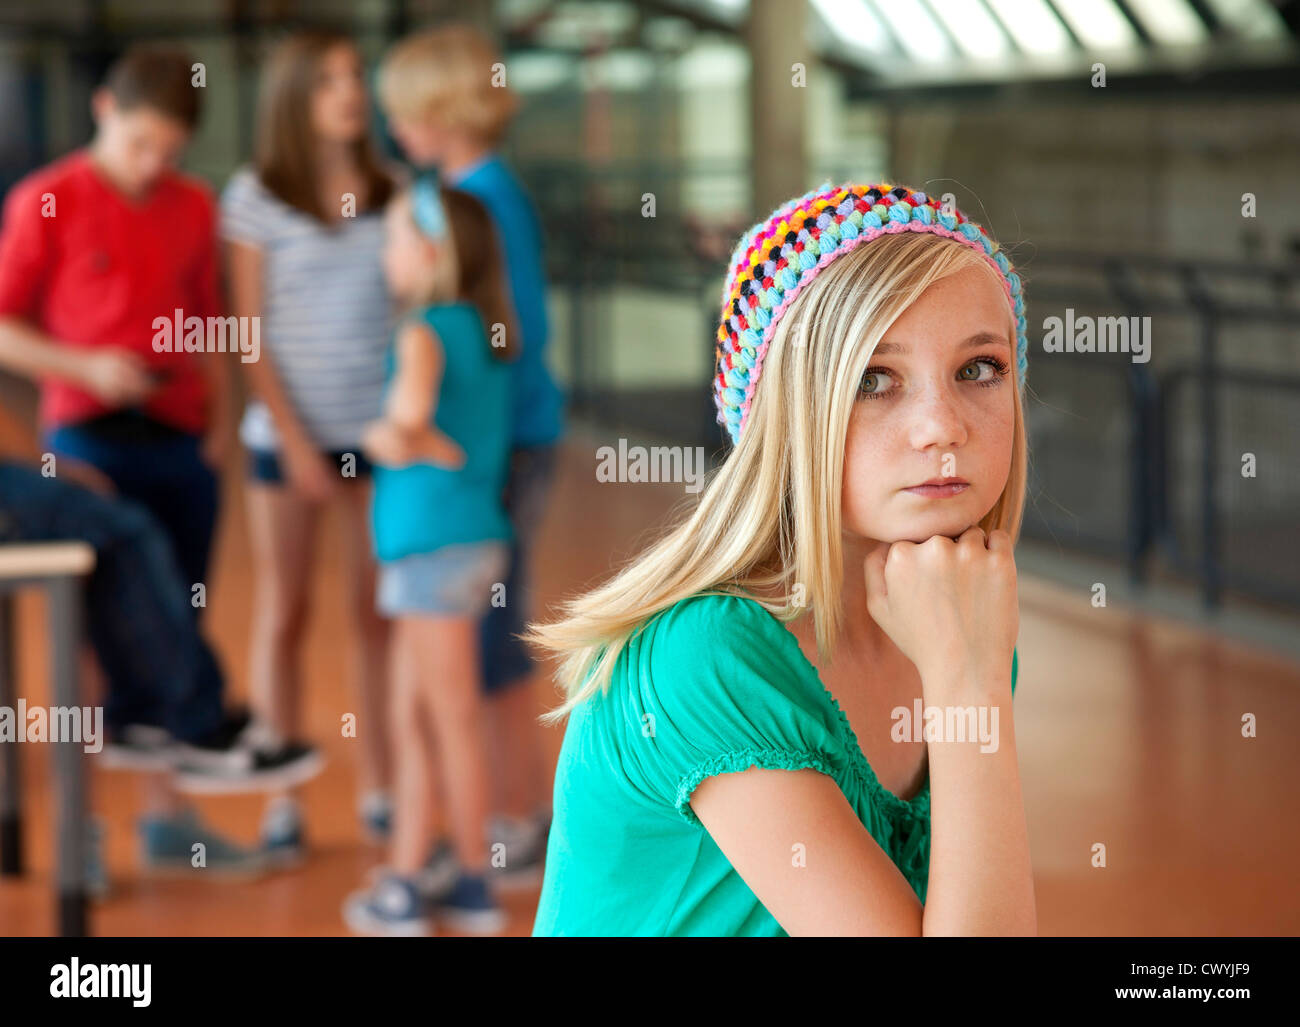 Serious teenage girl in front of group of schoolchildren Stock Photo